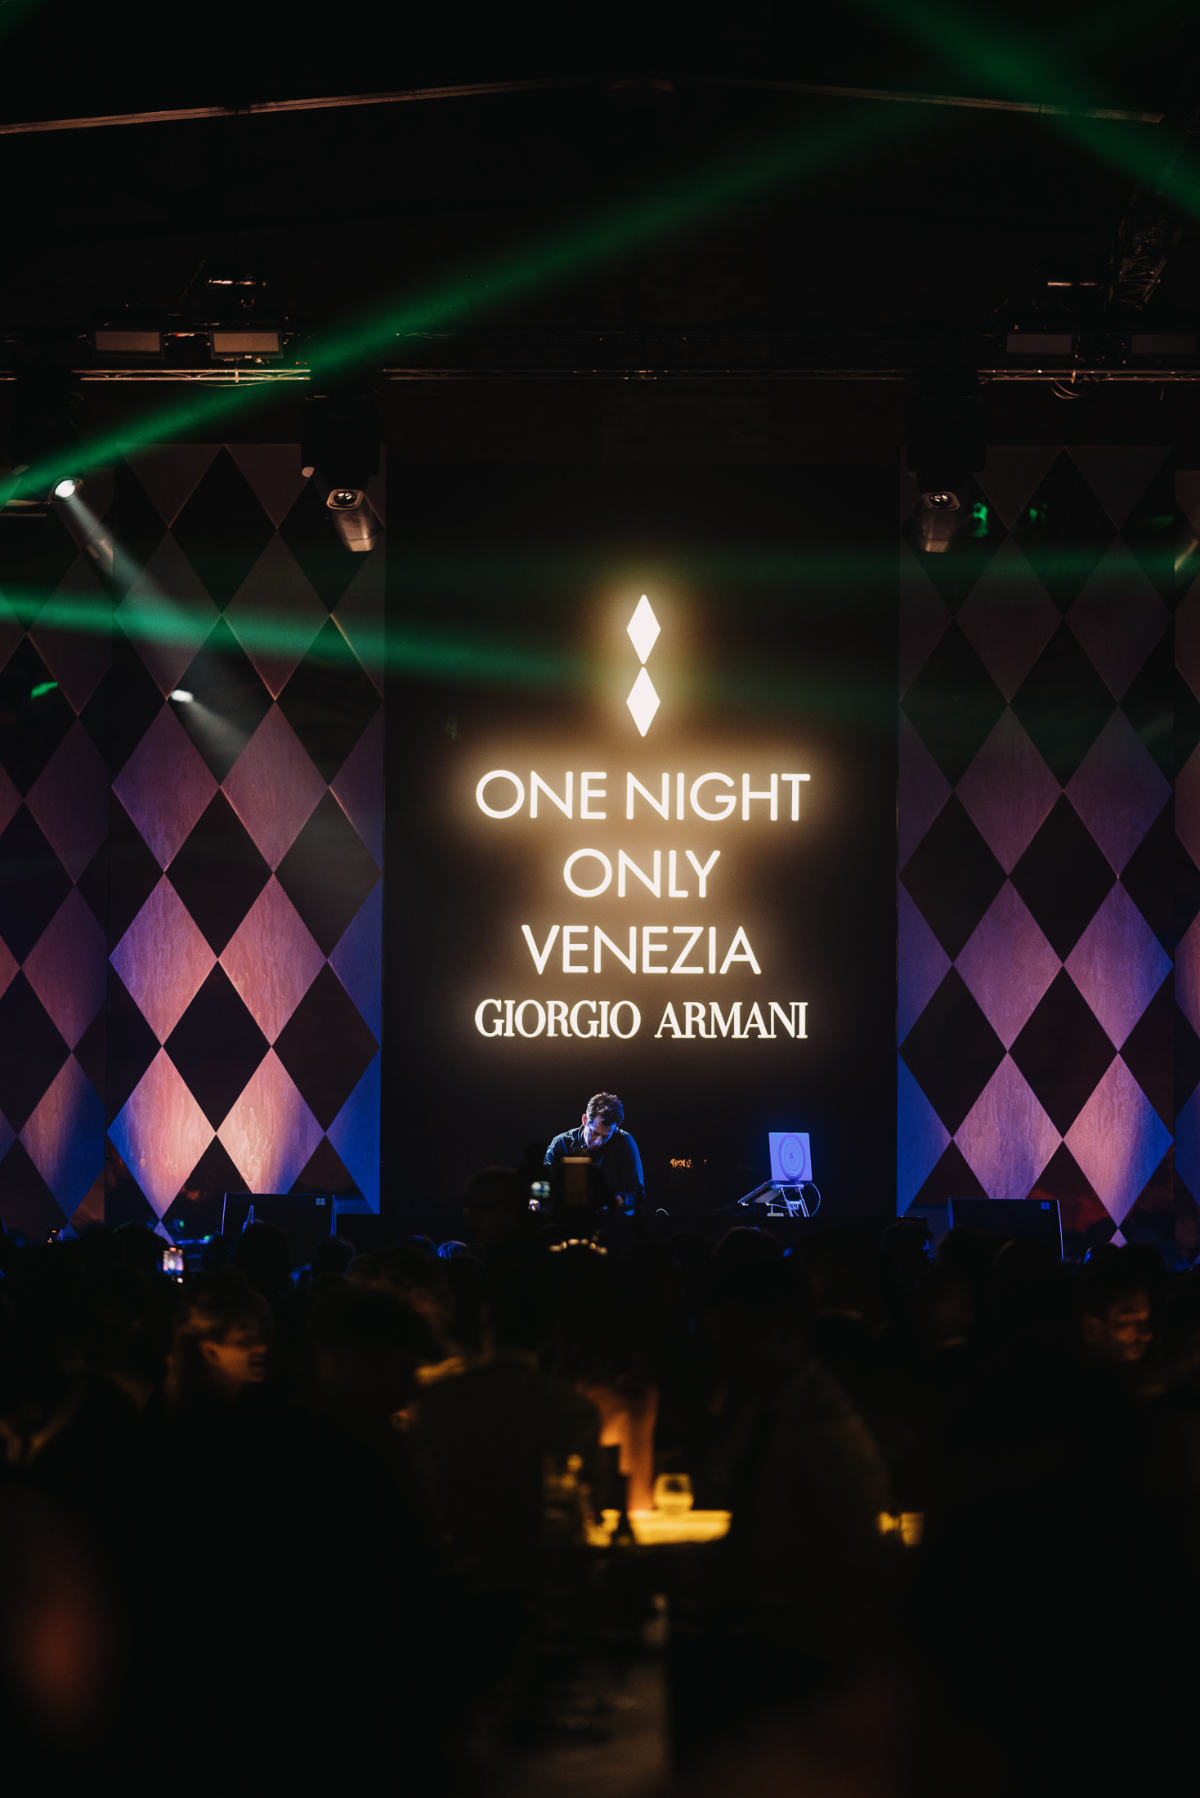 One Night Only Venezia - Giorgio Armani Celebrates The City With A Giorgio Armani Privé Show